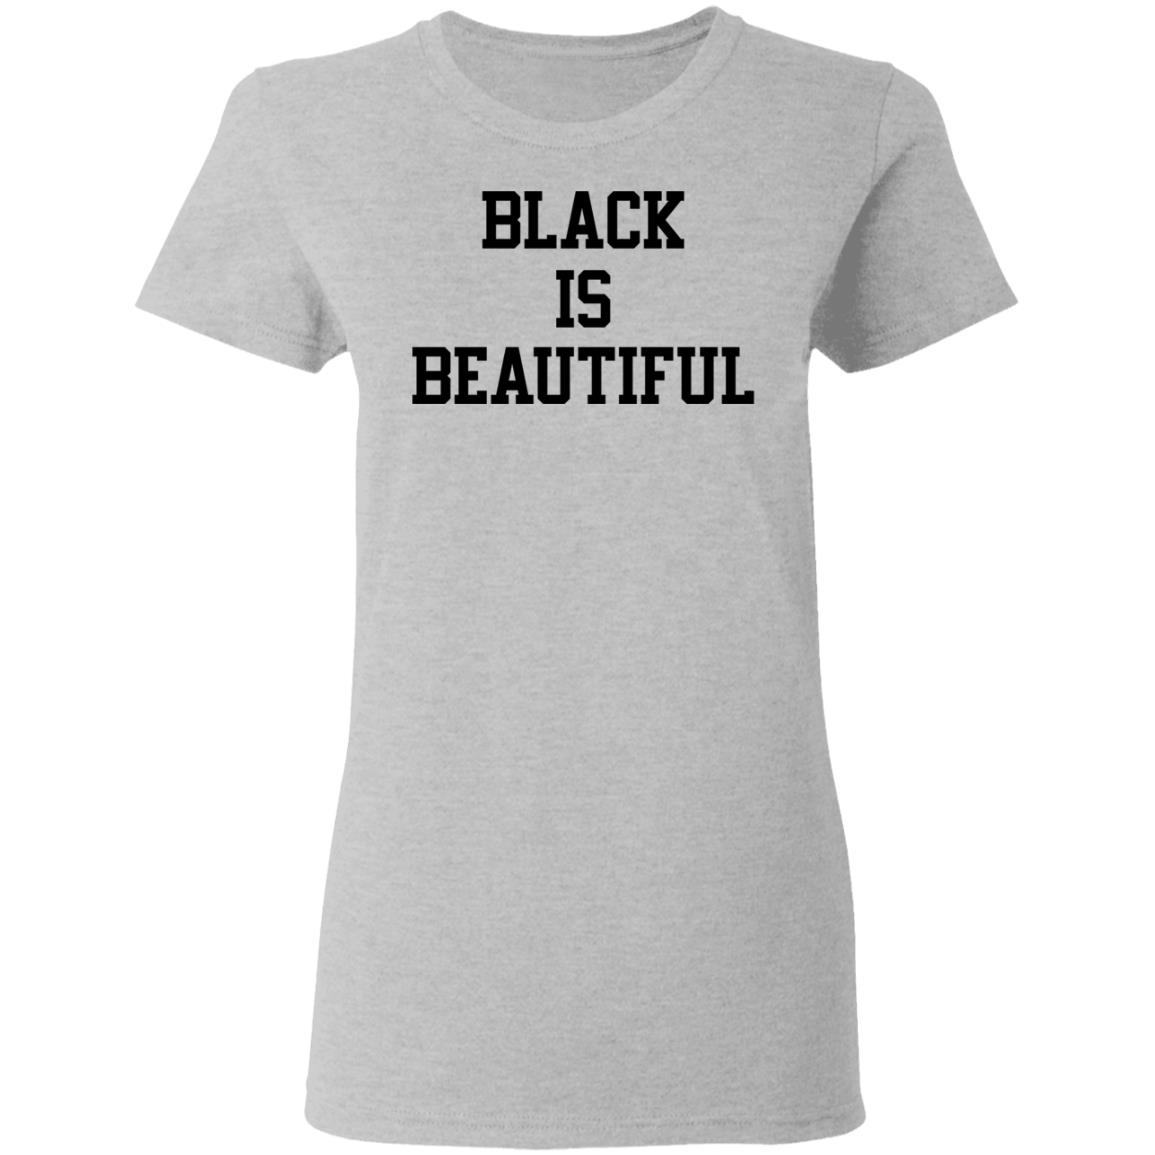 Black is beautiful shirt - Rockatee